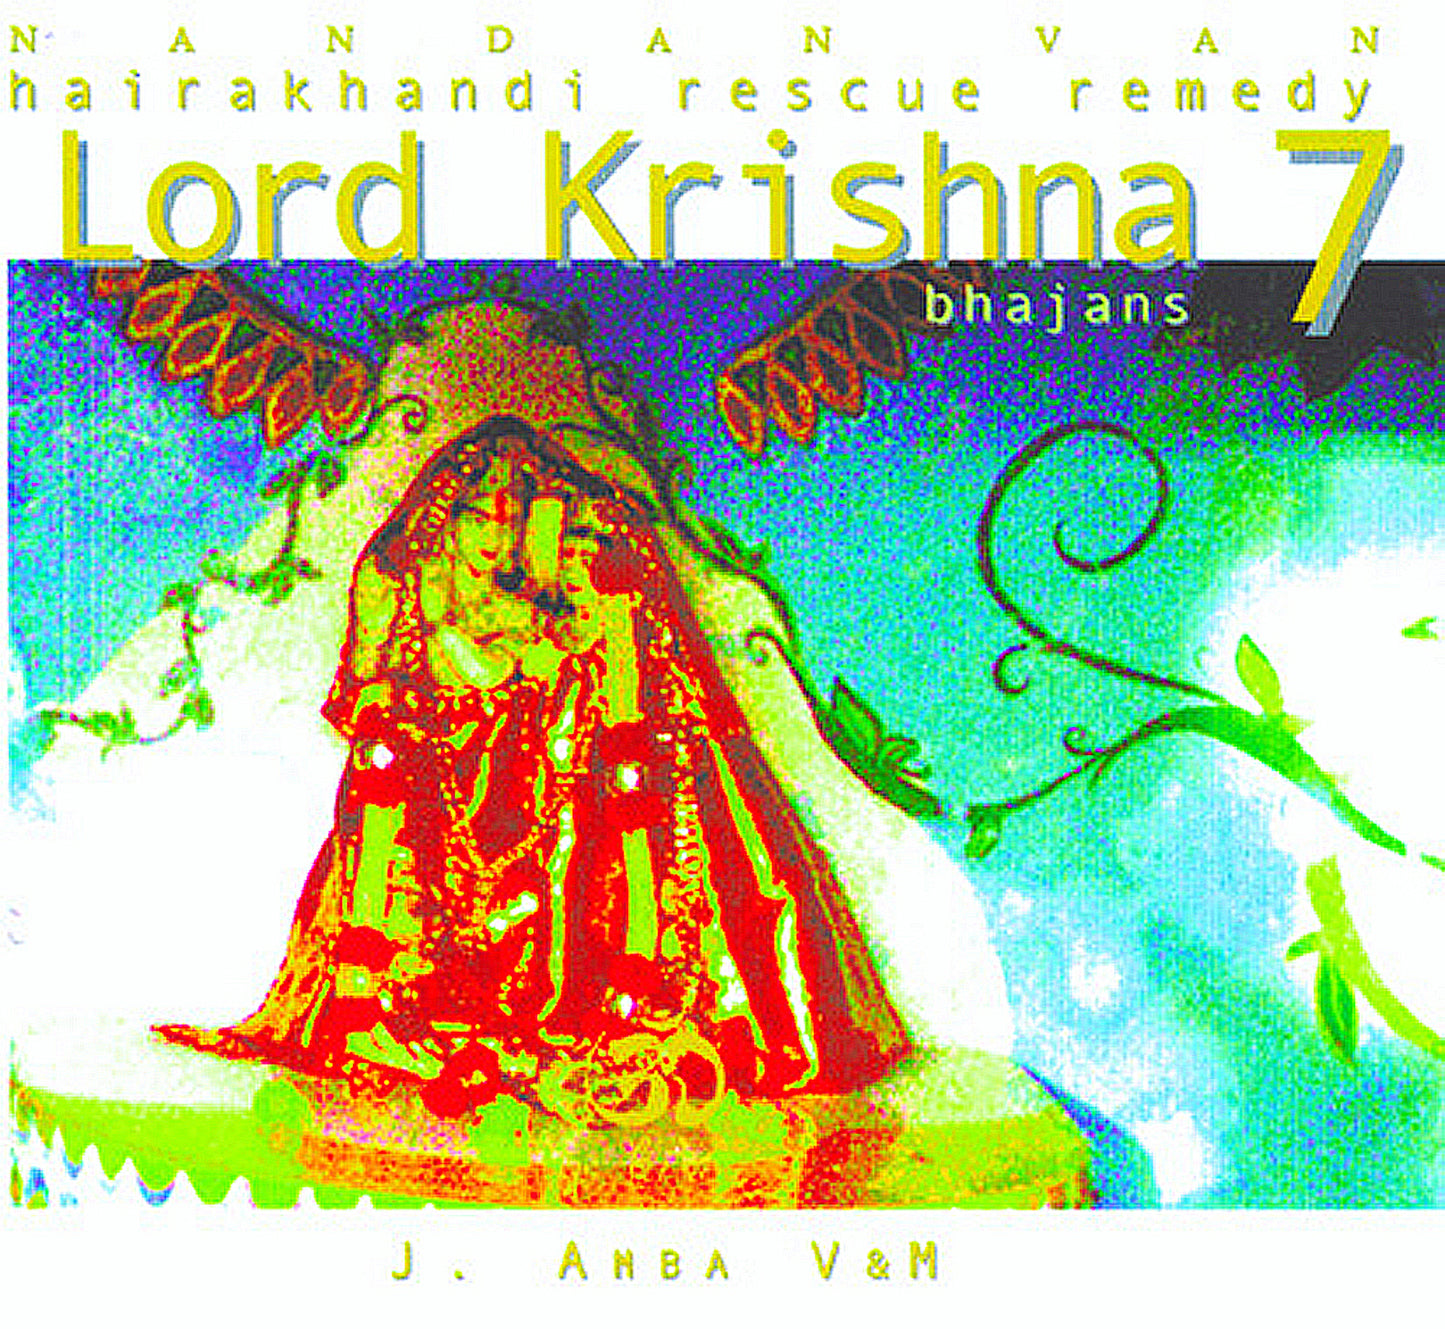 Lord Krishna, Bhajans - Hairakhandi Rescue Remedy 07 - Hindu Sanatan Dharma Spirituality Music Therapy for Meditation